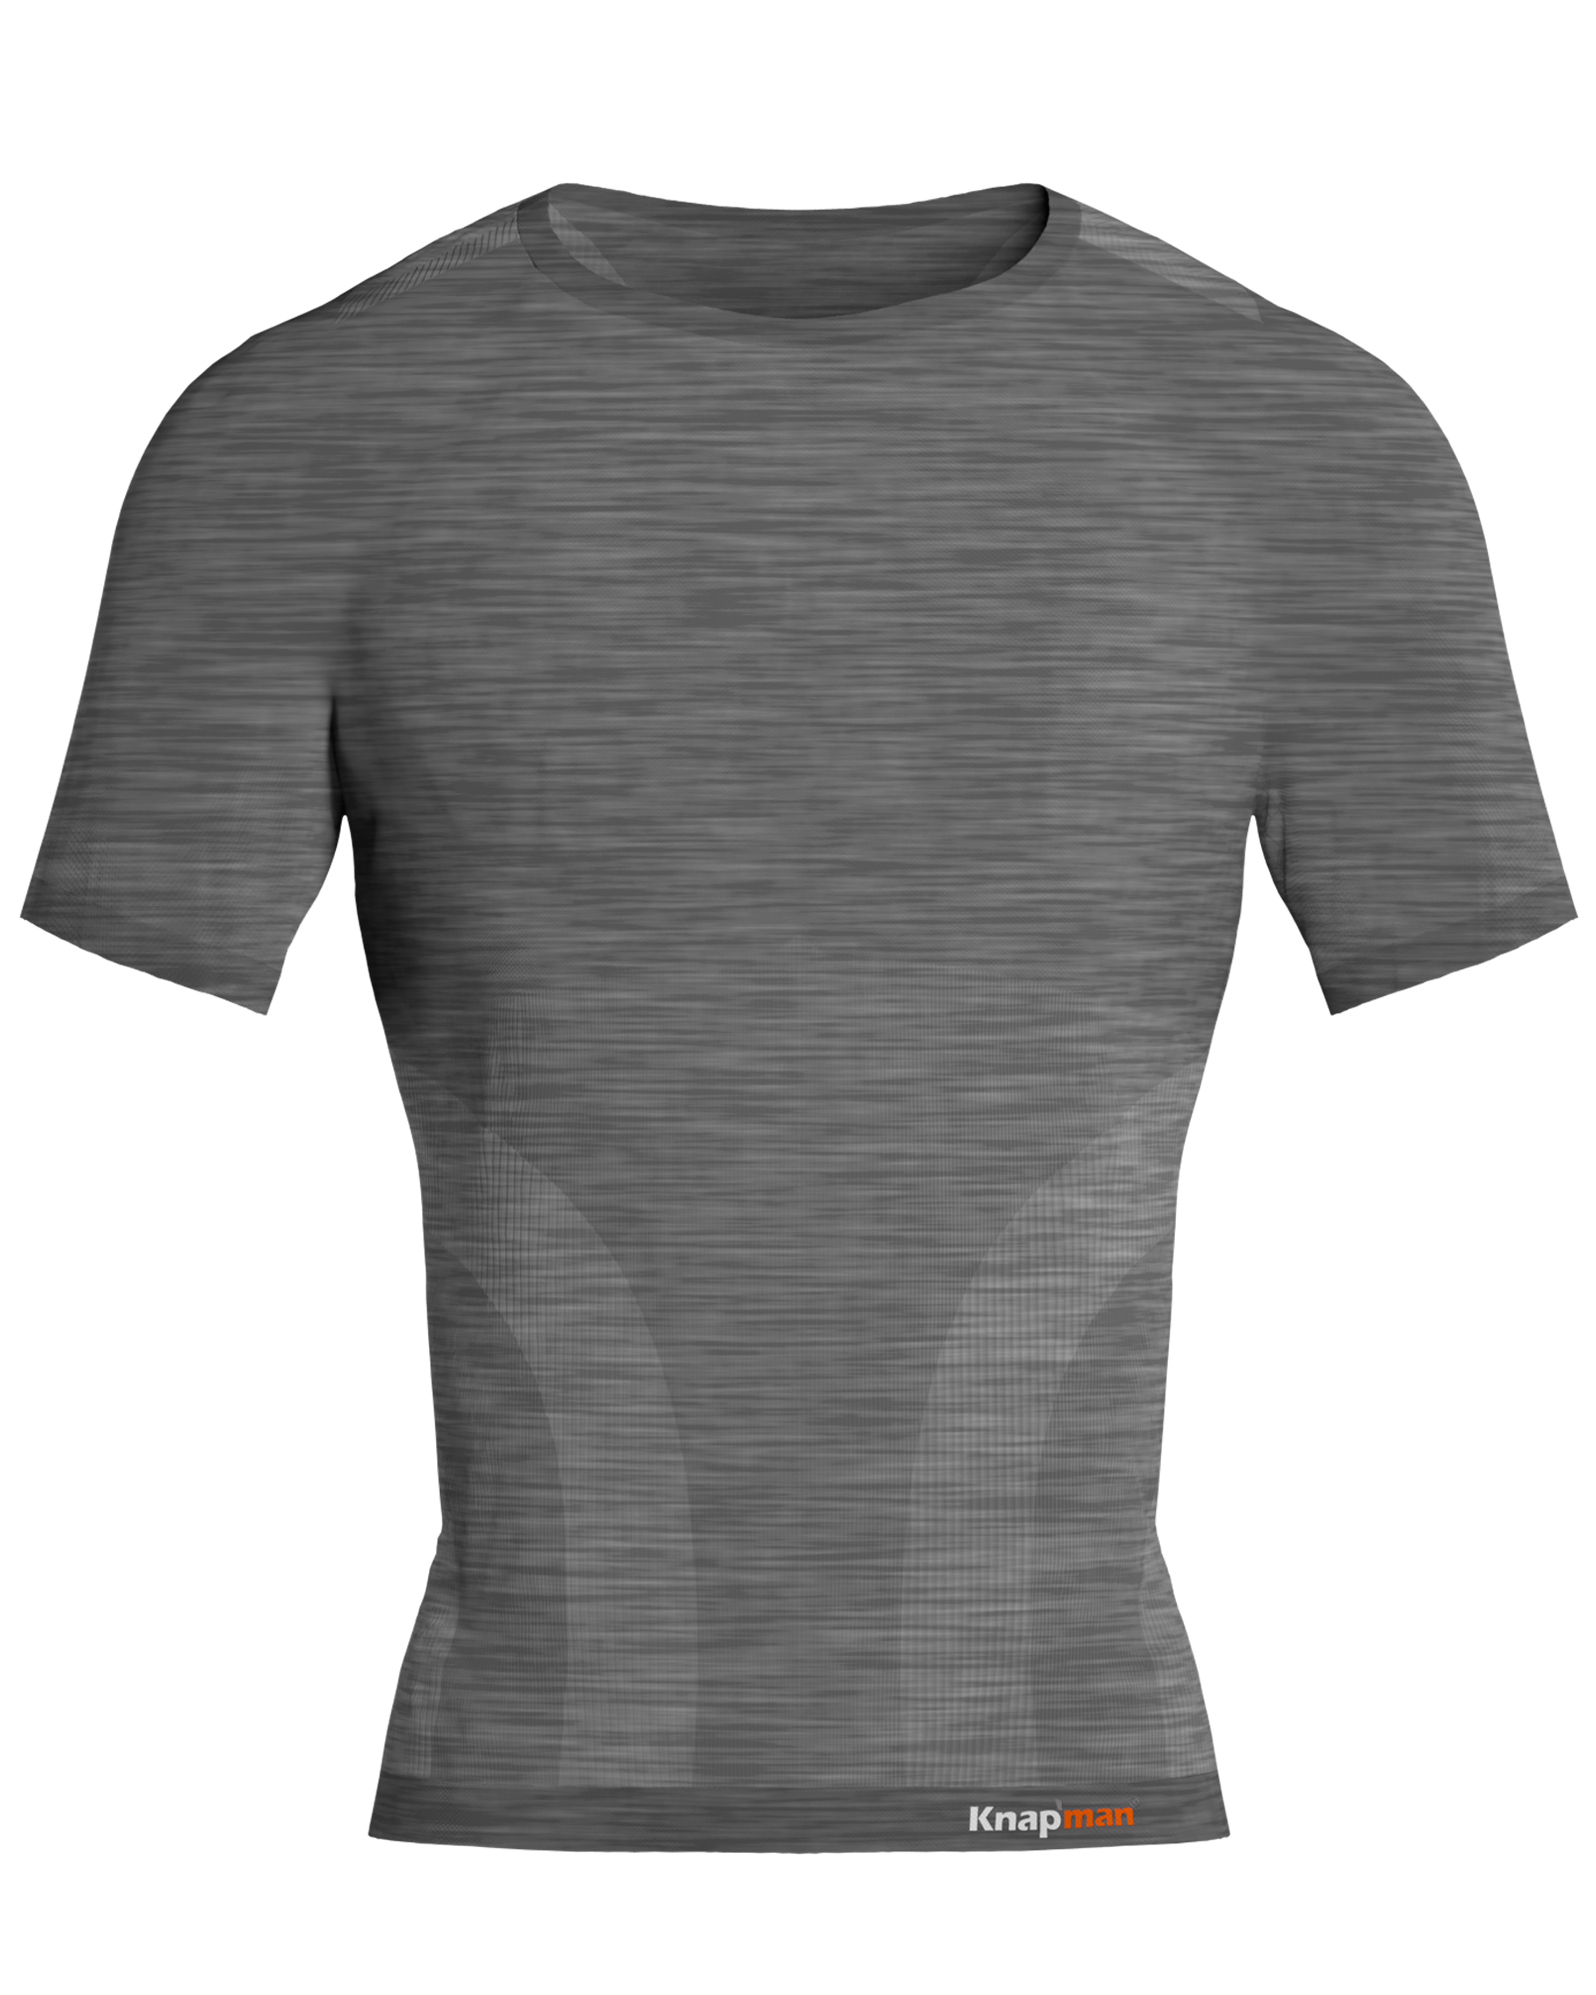 Knapman Pro Performance Baselayer Shirt Short Sleeve Grijs Melange